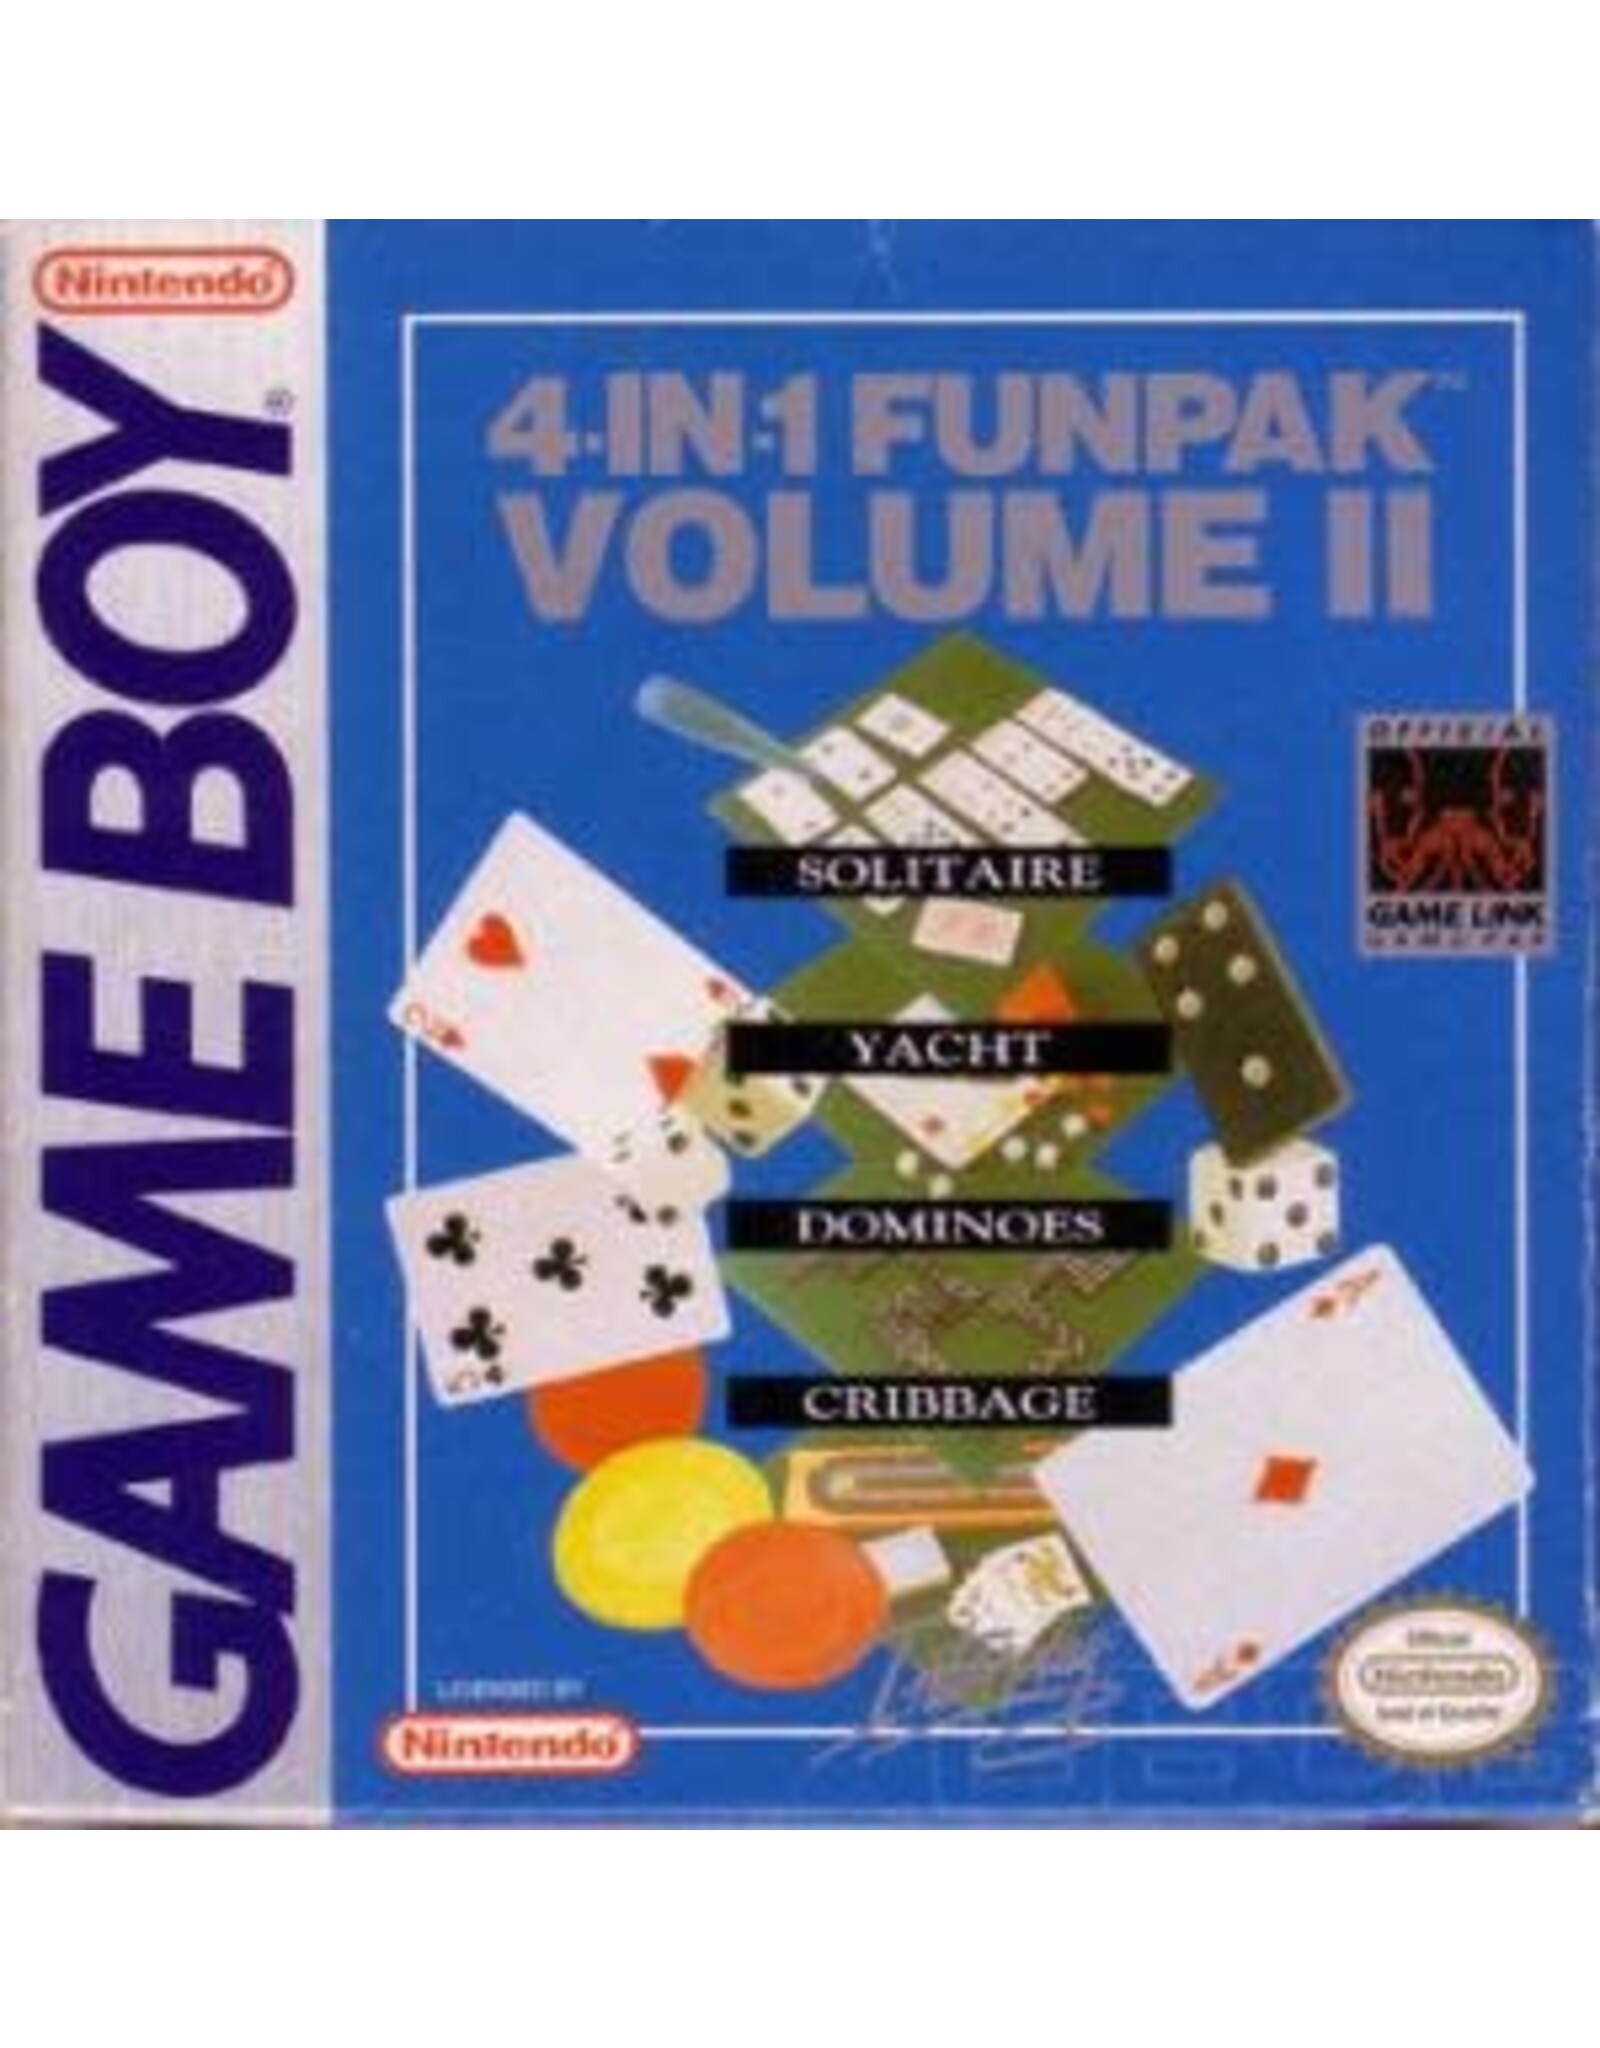 Game Boy 4 in 1 Funpak Volume II (Cart Only)